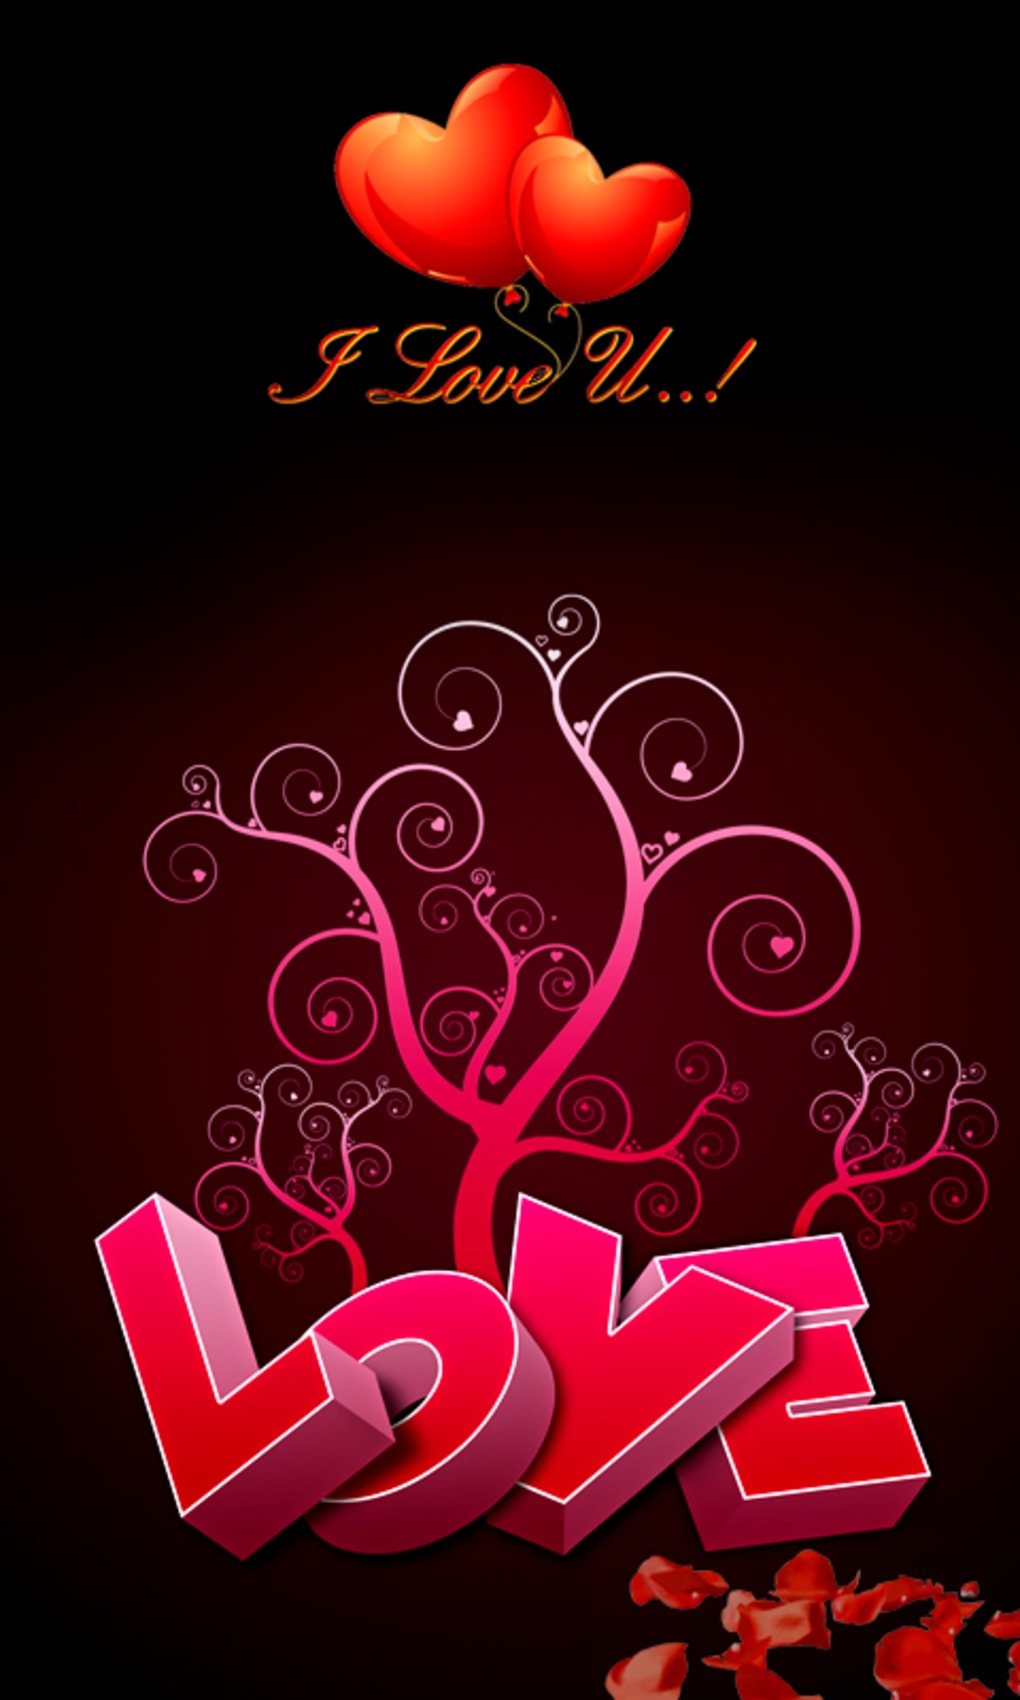 Love Live Wallpaper Hd New - All Love Images Download - HD Wallpaper 